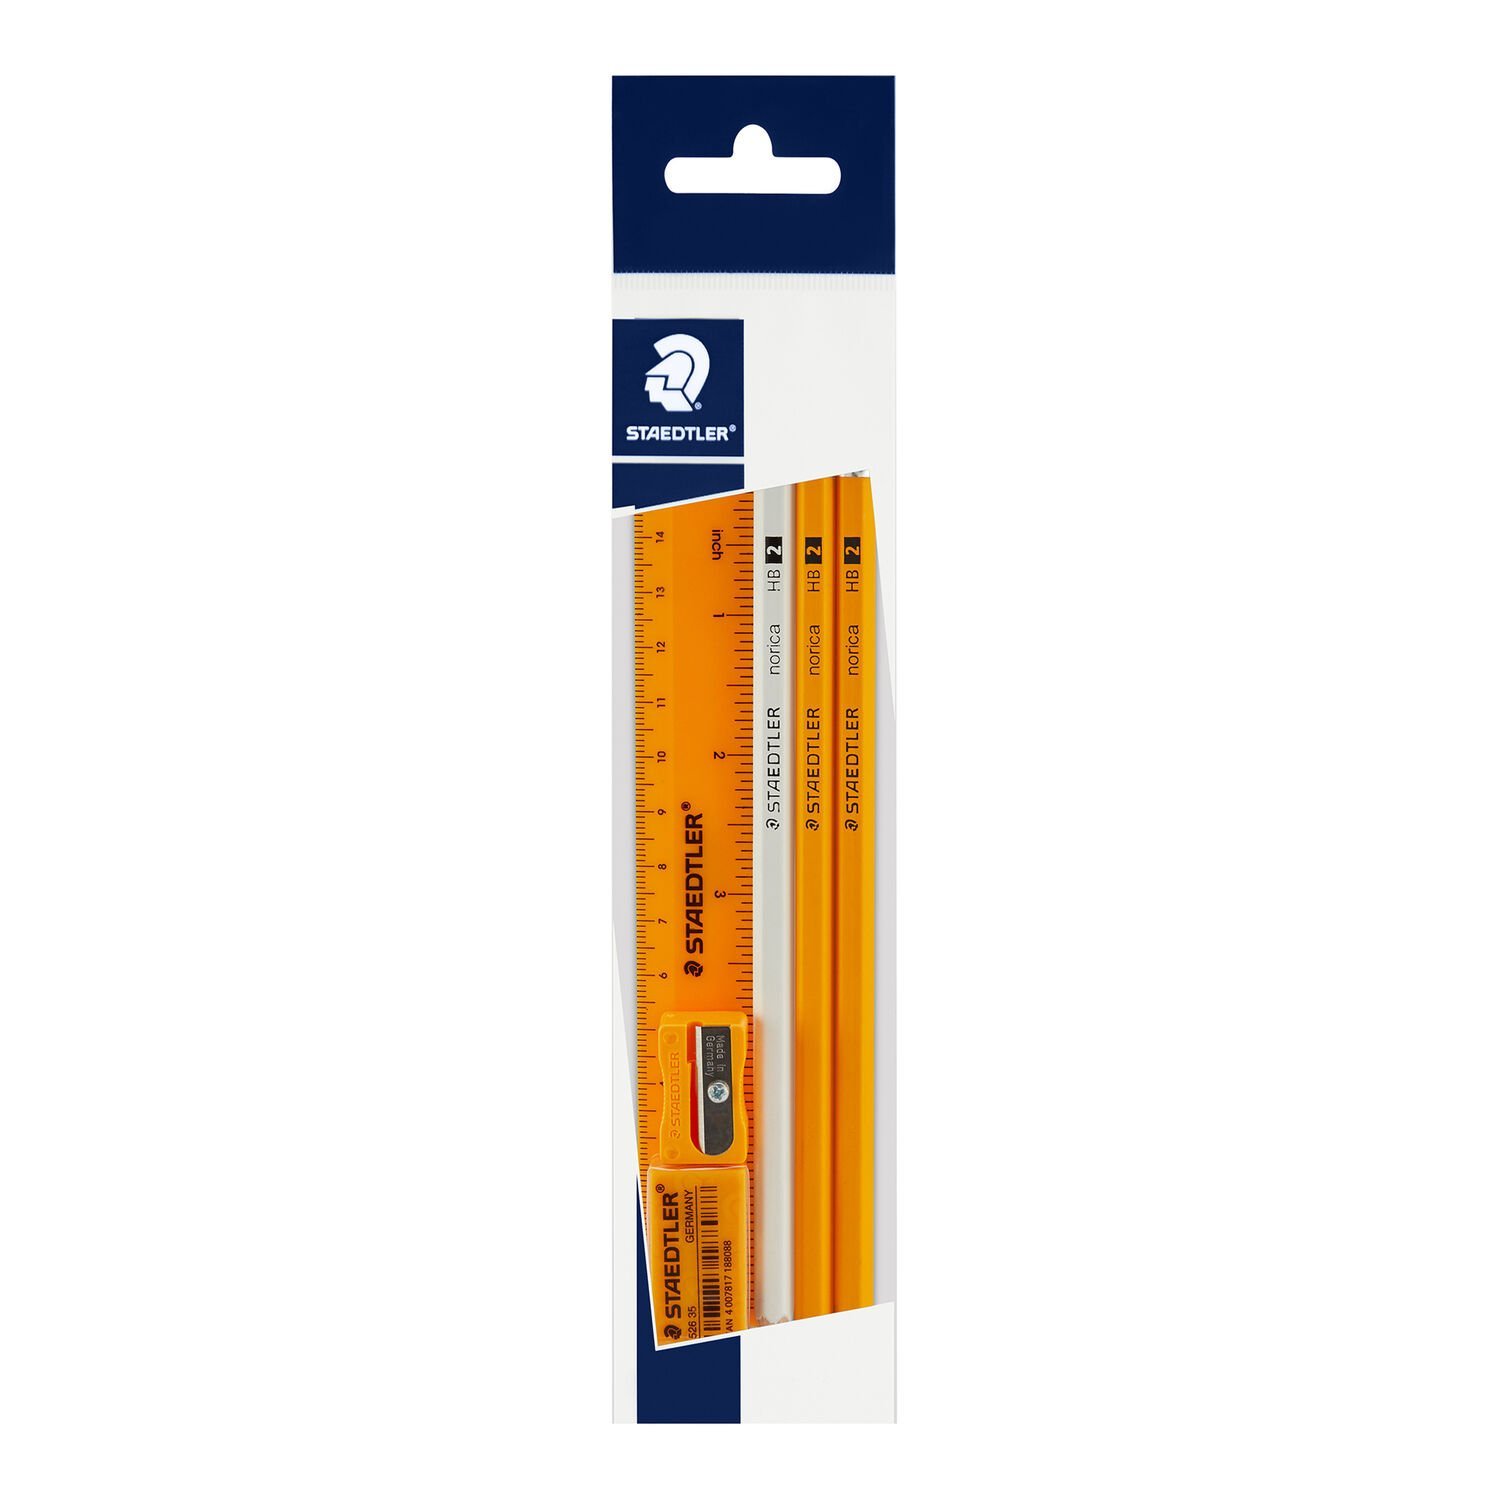 Polybag containing 3 graphite pencils, 1 ruler, 1 eraser and 1 sharpener - pastel combo set orange